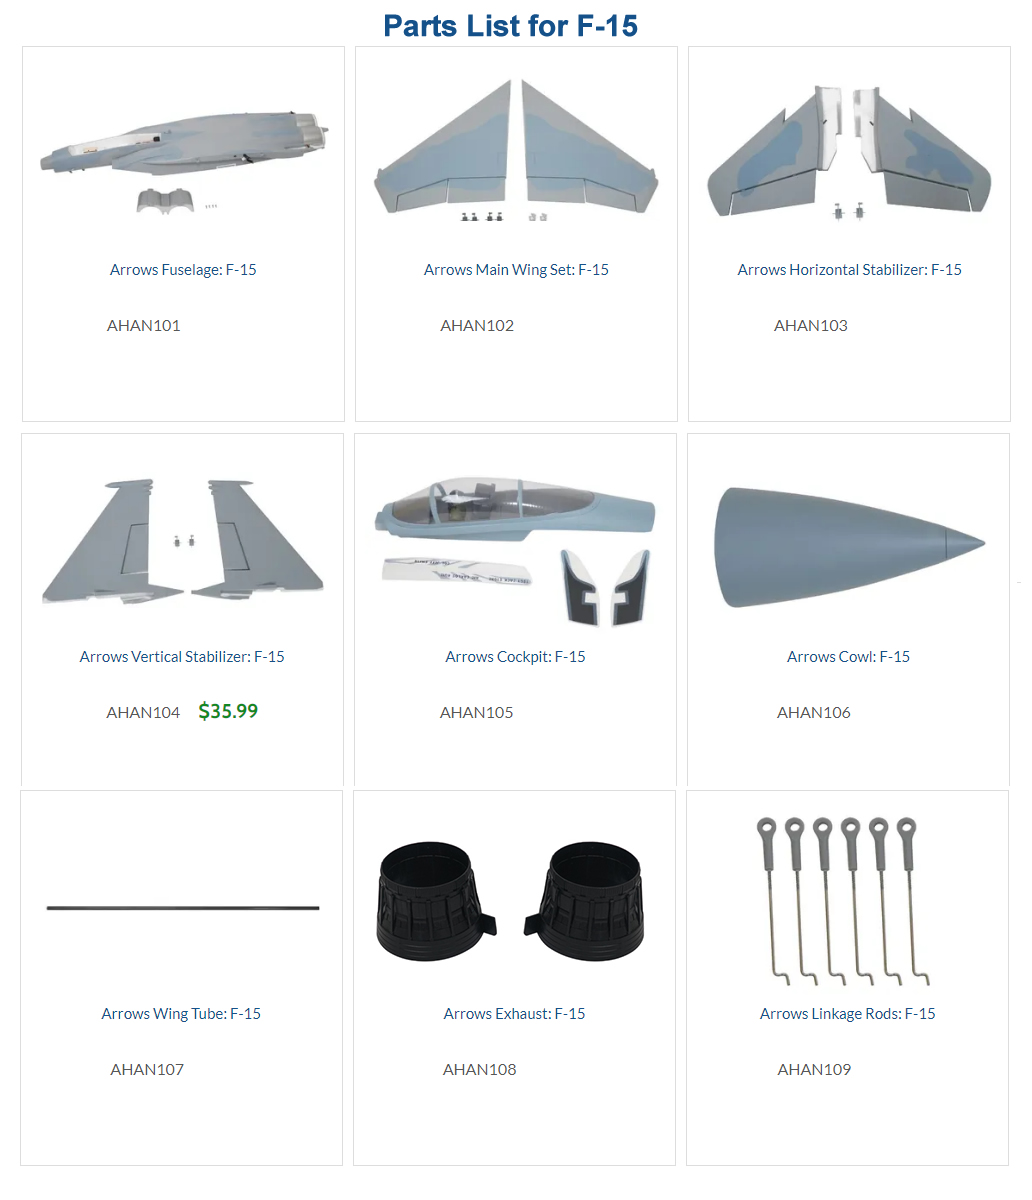 Arrows Hobby F-15 Parts List